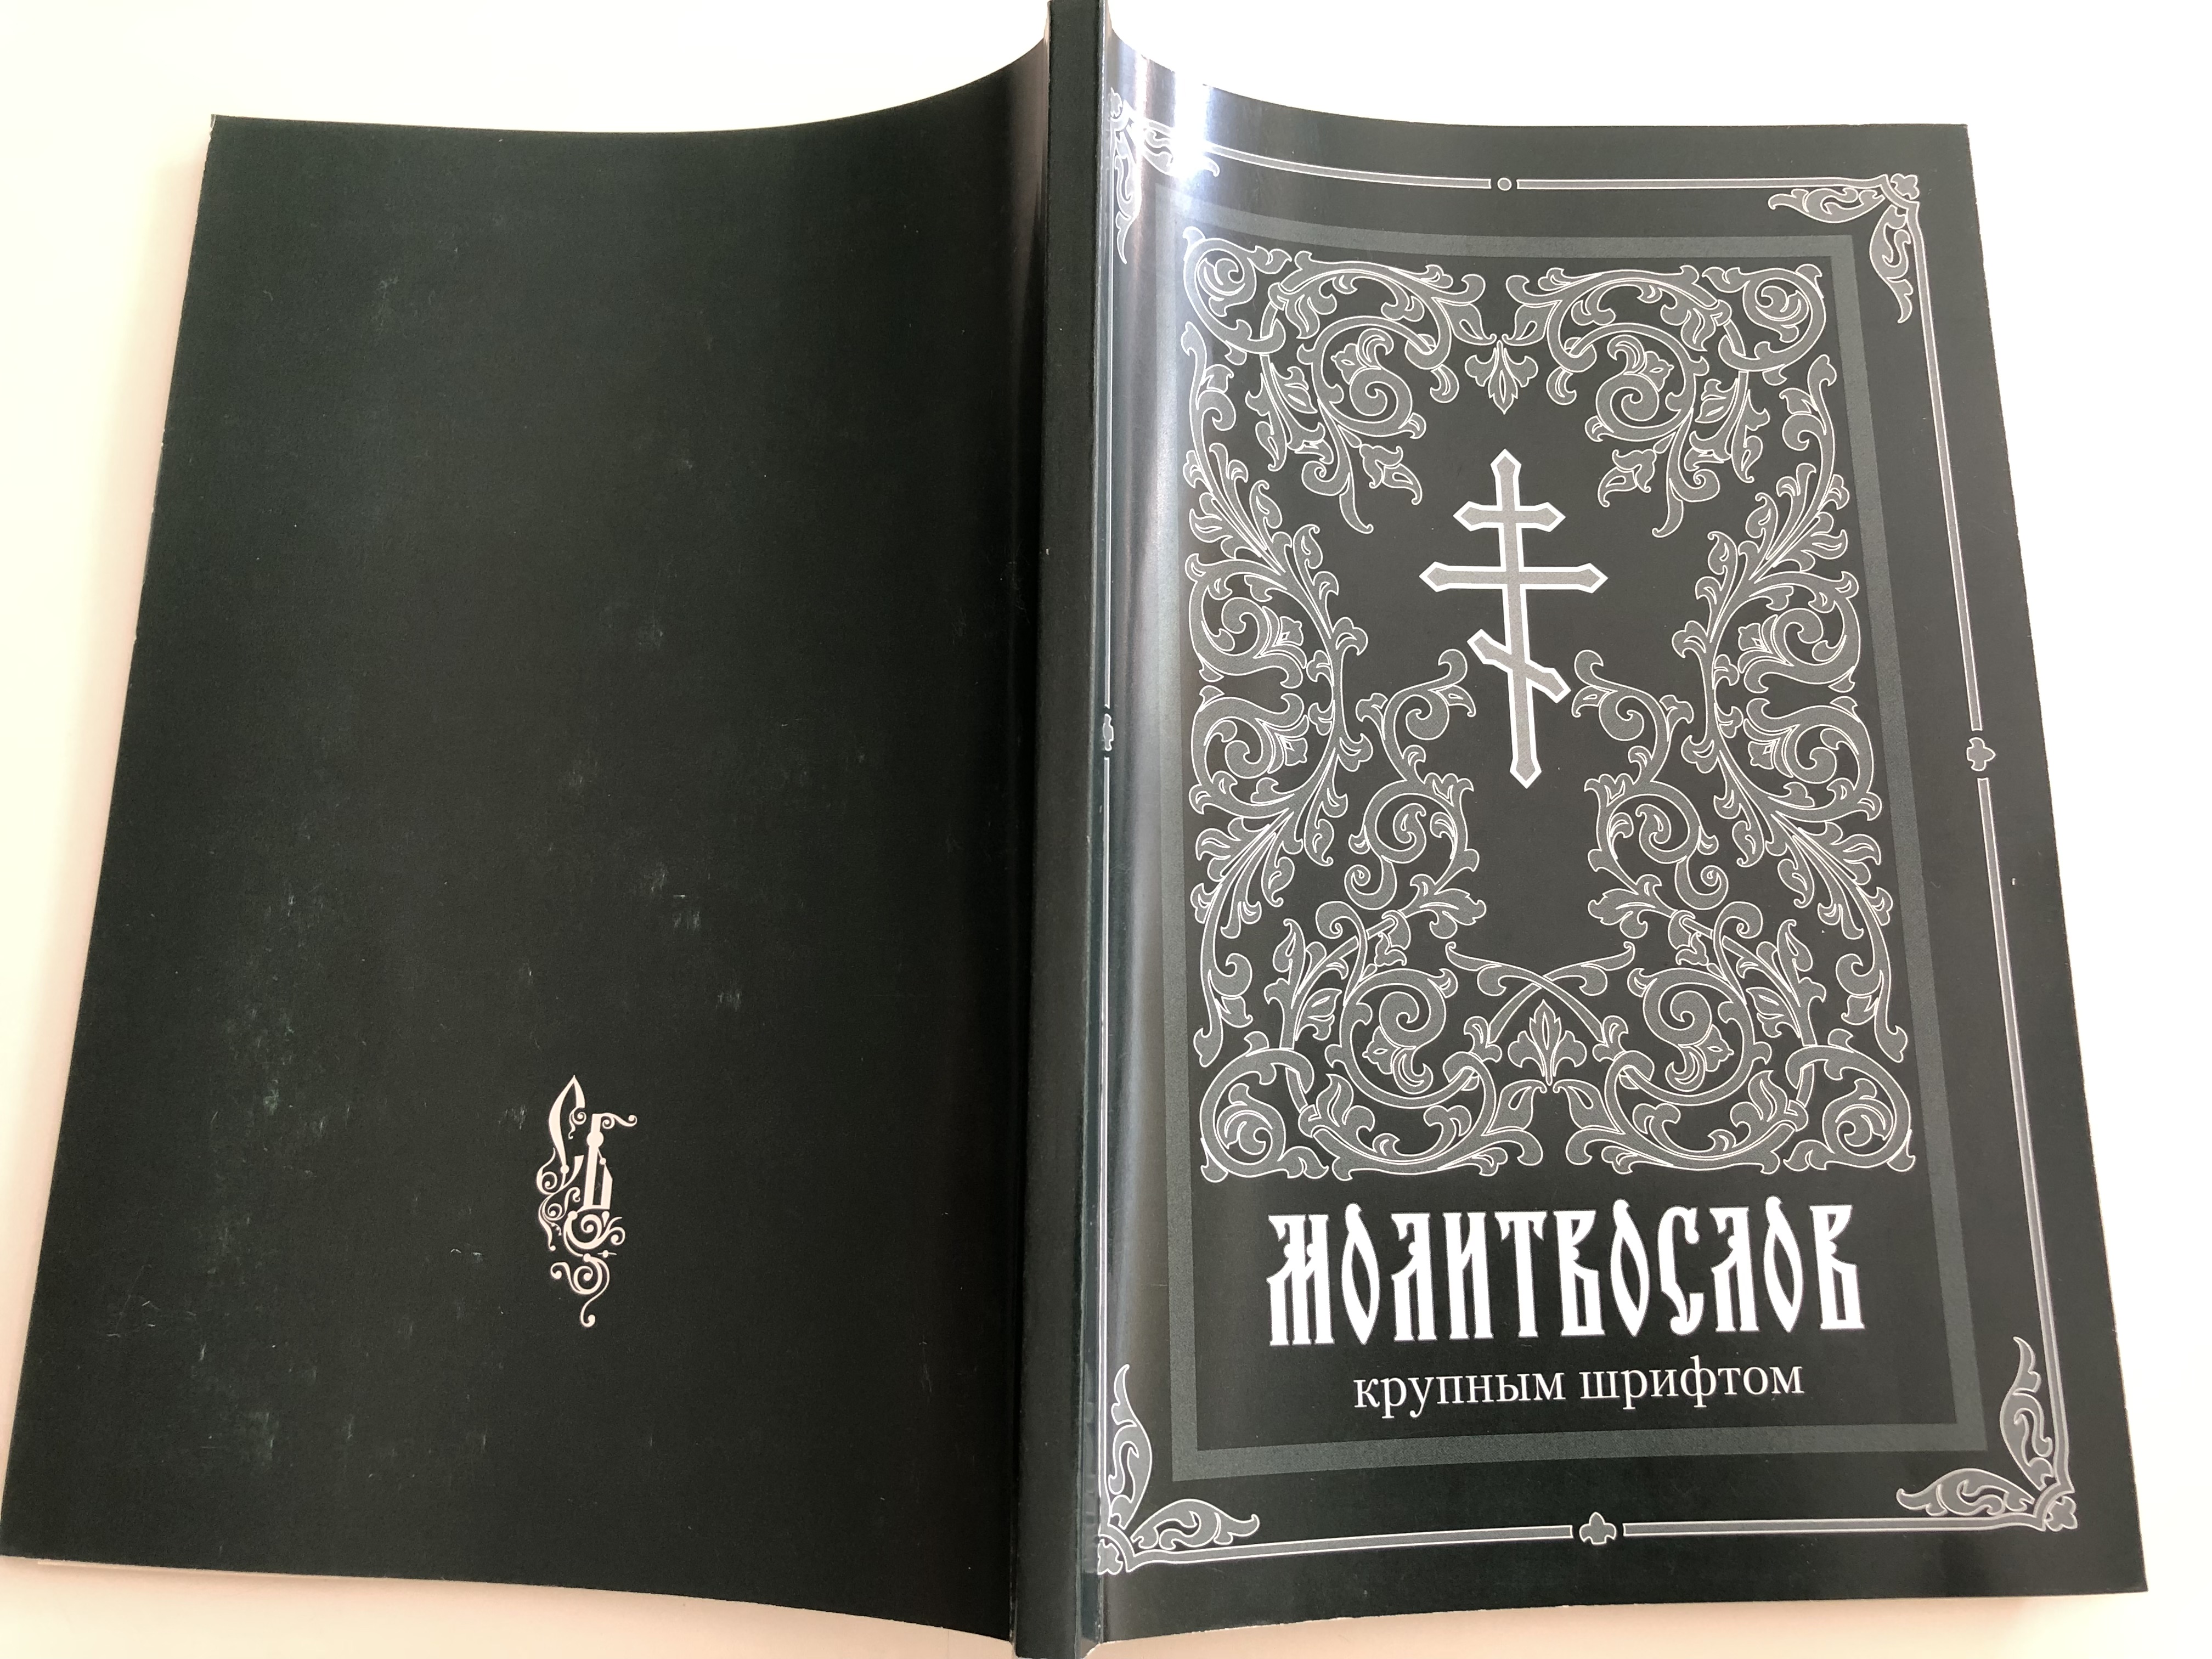 -large-print-russian-orthodox-prayer-book-hardcover-2016-13-.jpg